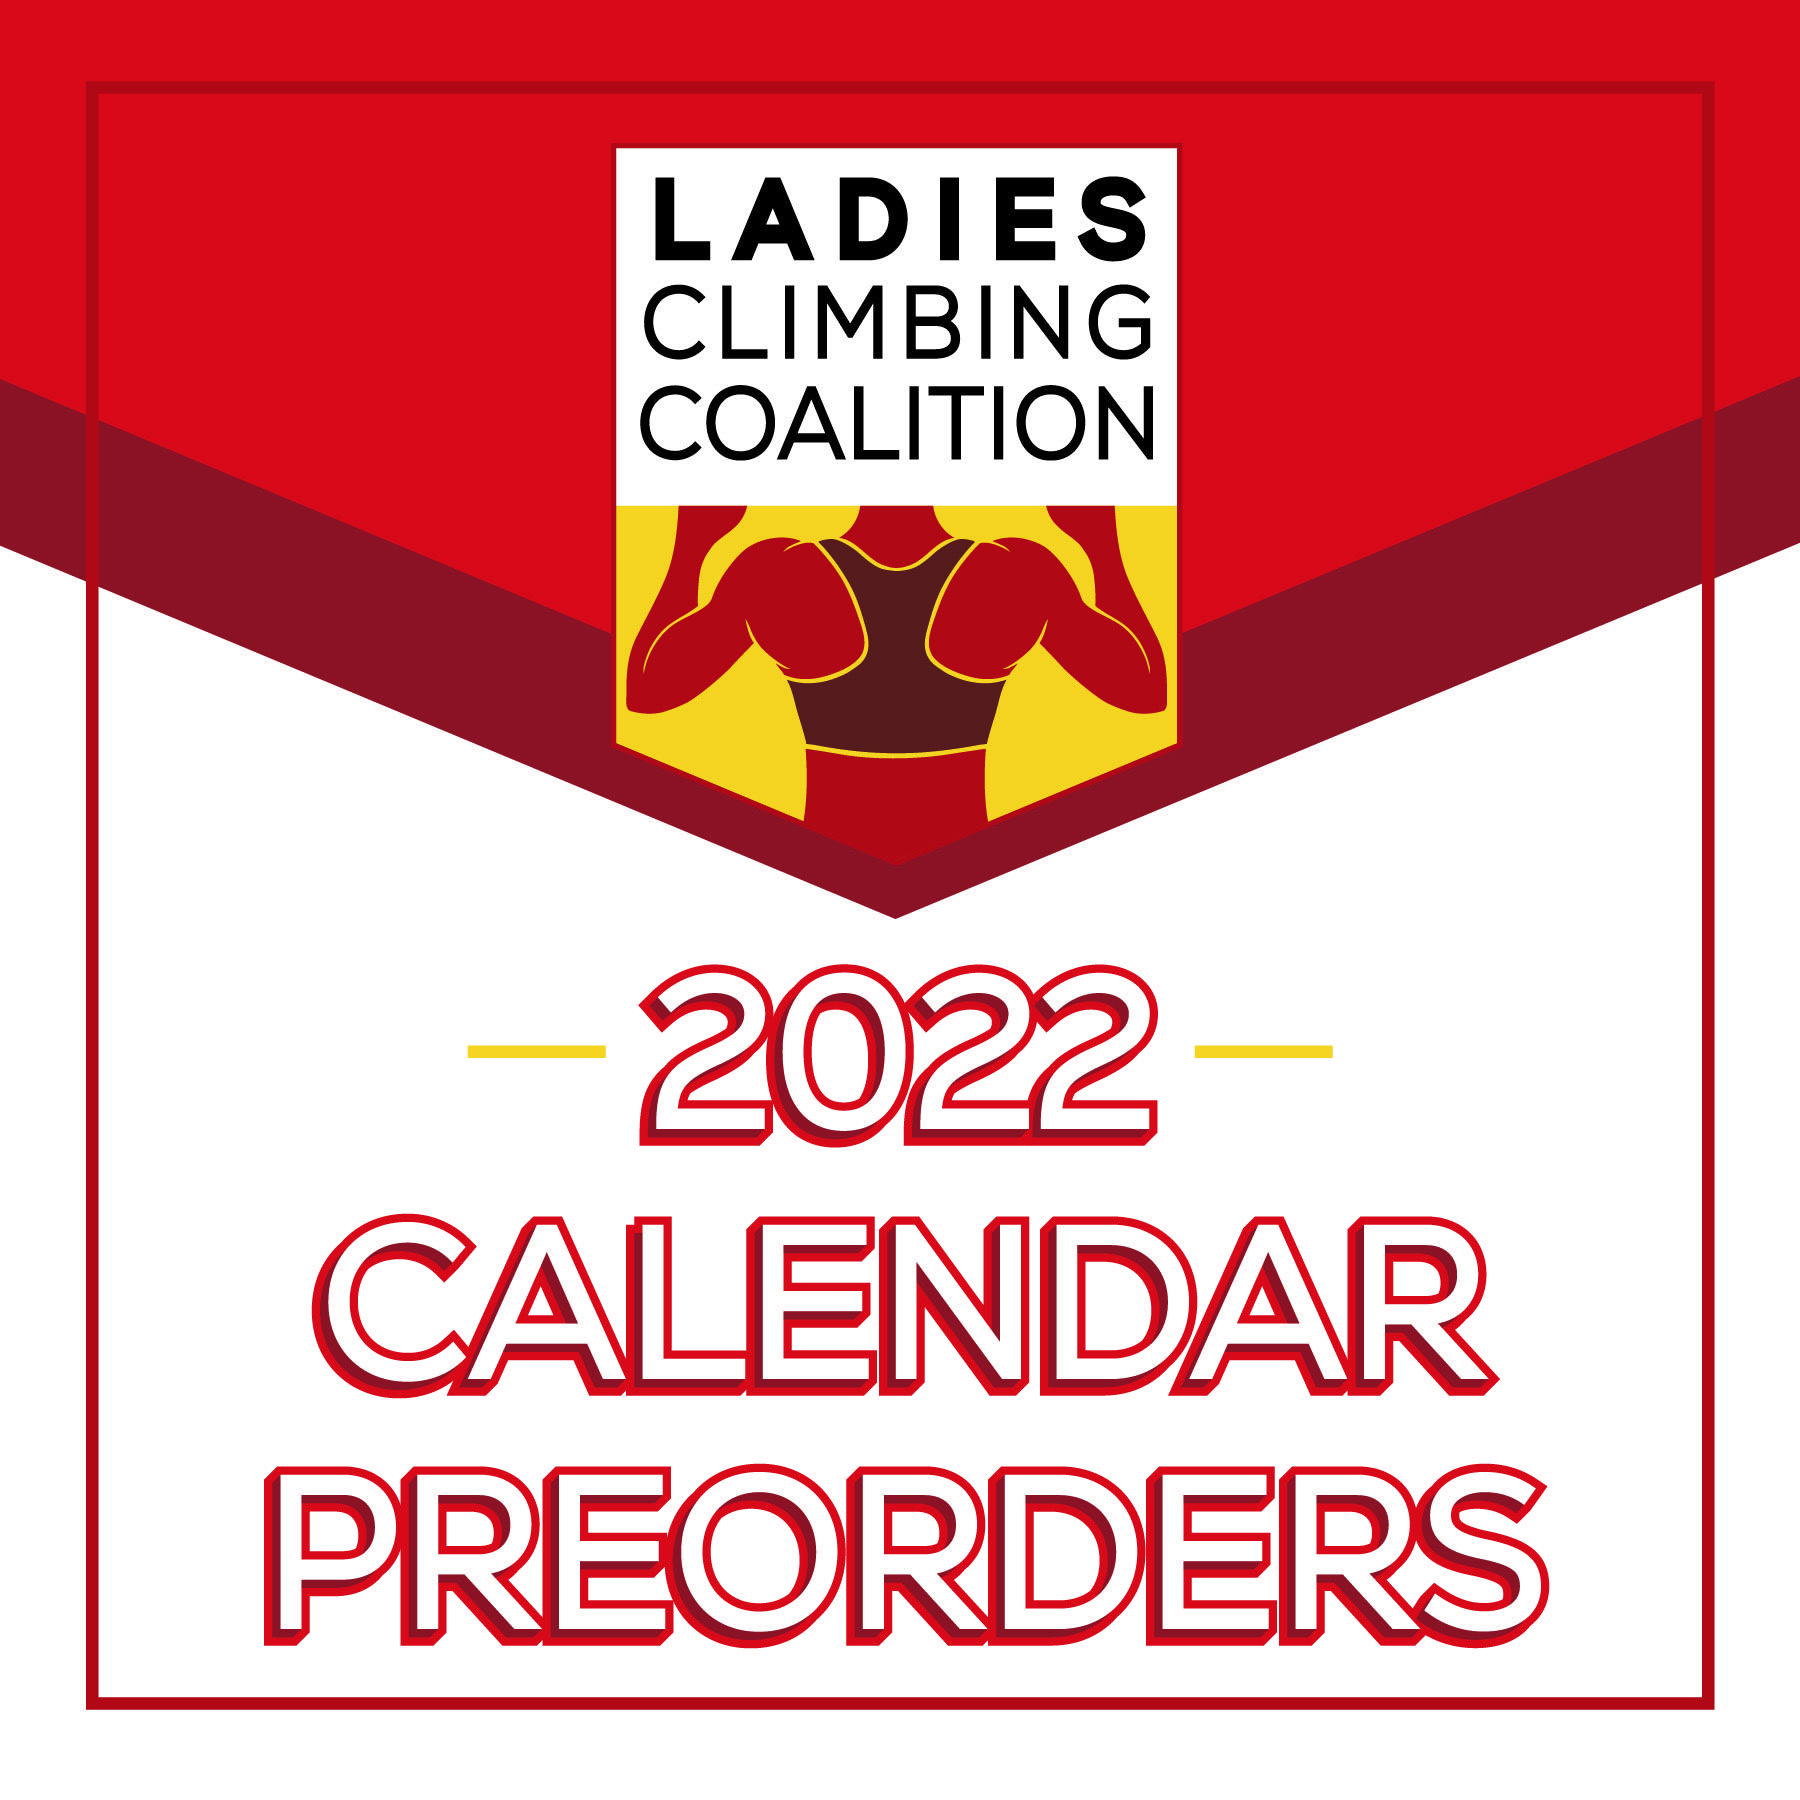 Lcc Calendar 2022 Ladies Climbing Coalition | Gear Shop